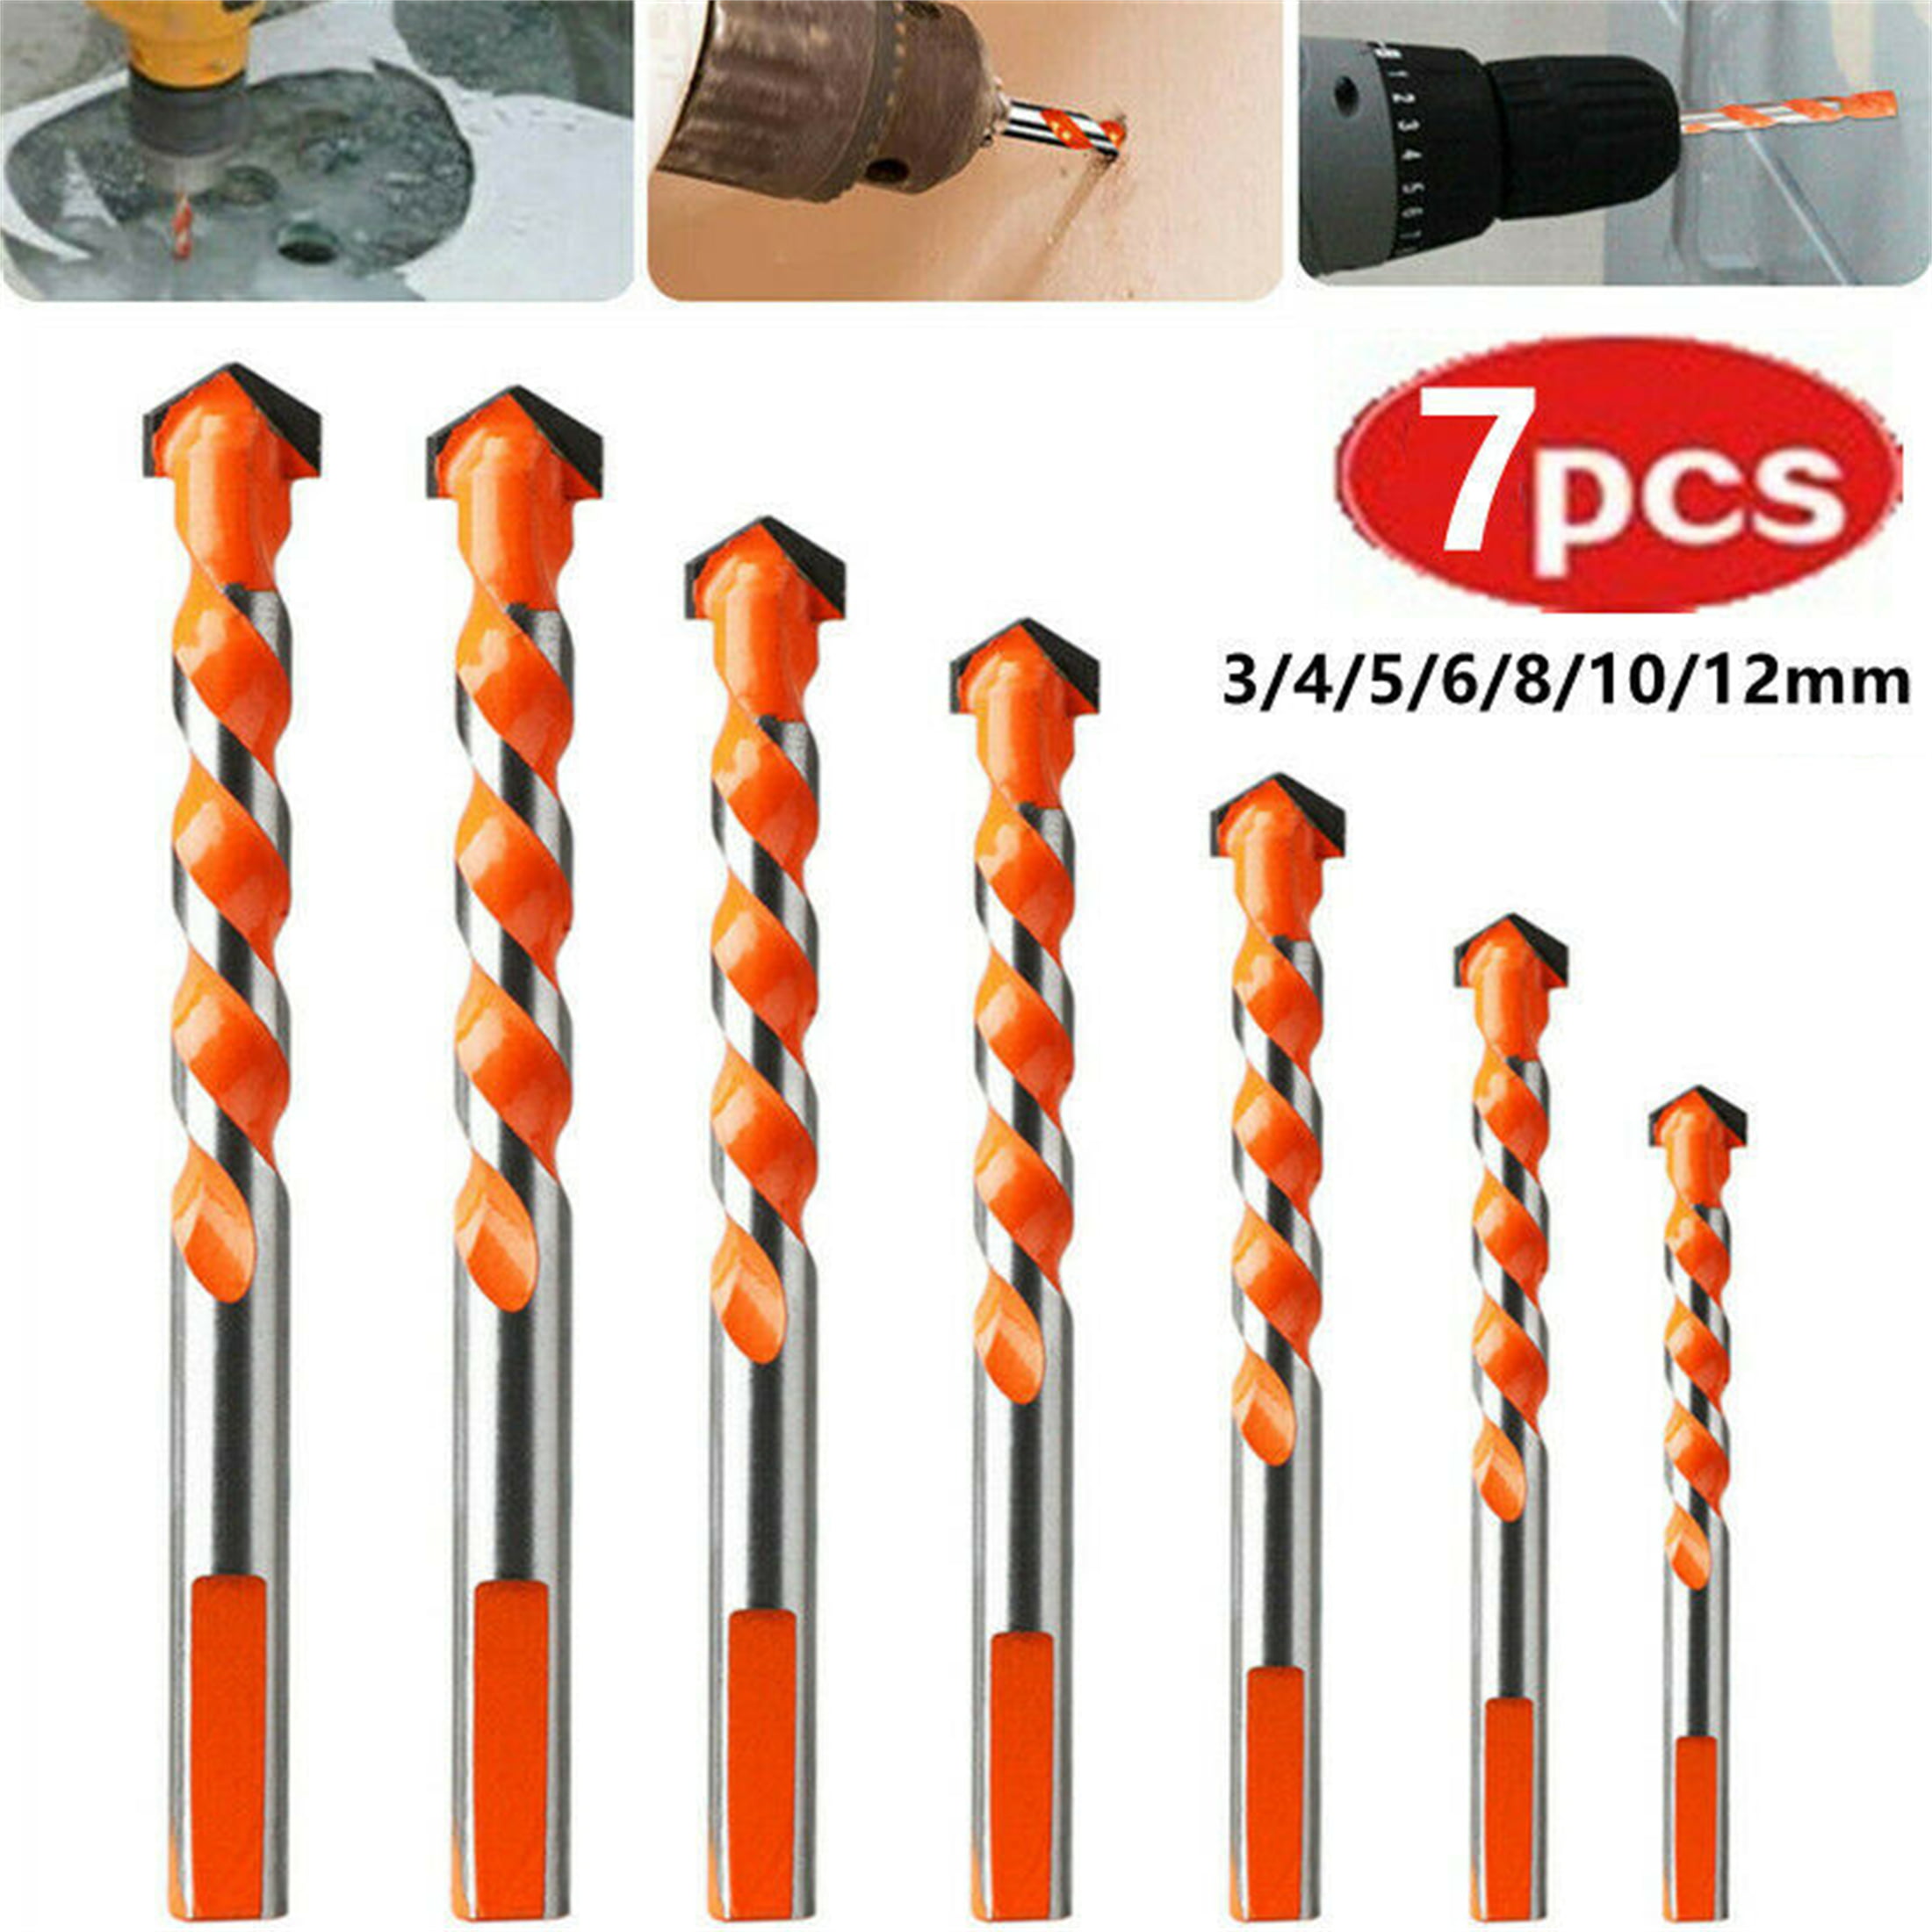 5/7Pcs Multifunctional Drill Bits Ceramic Wall Glass Punching Hole Working Set 